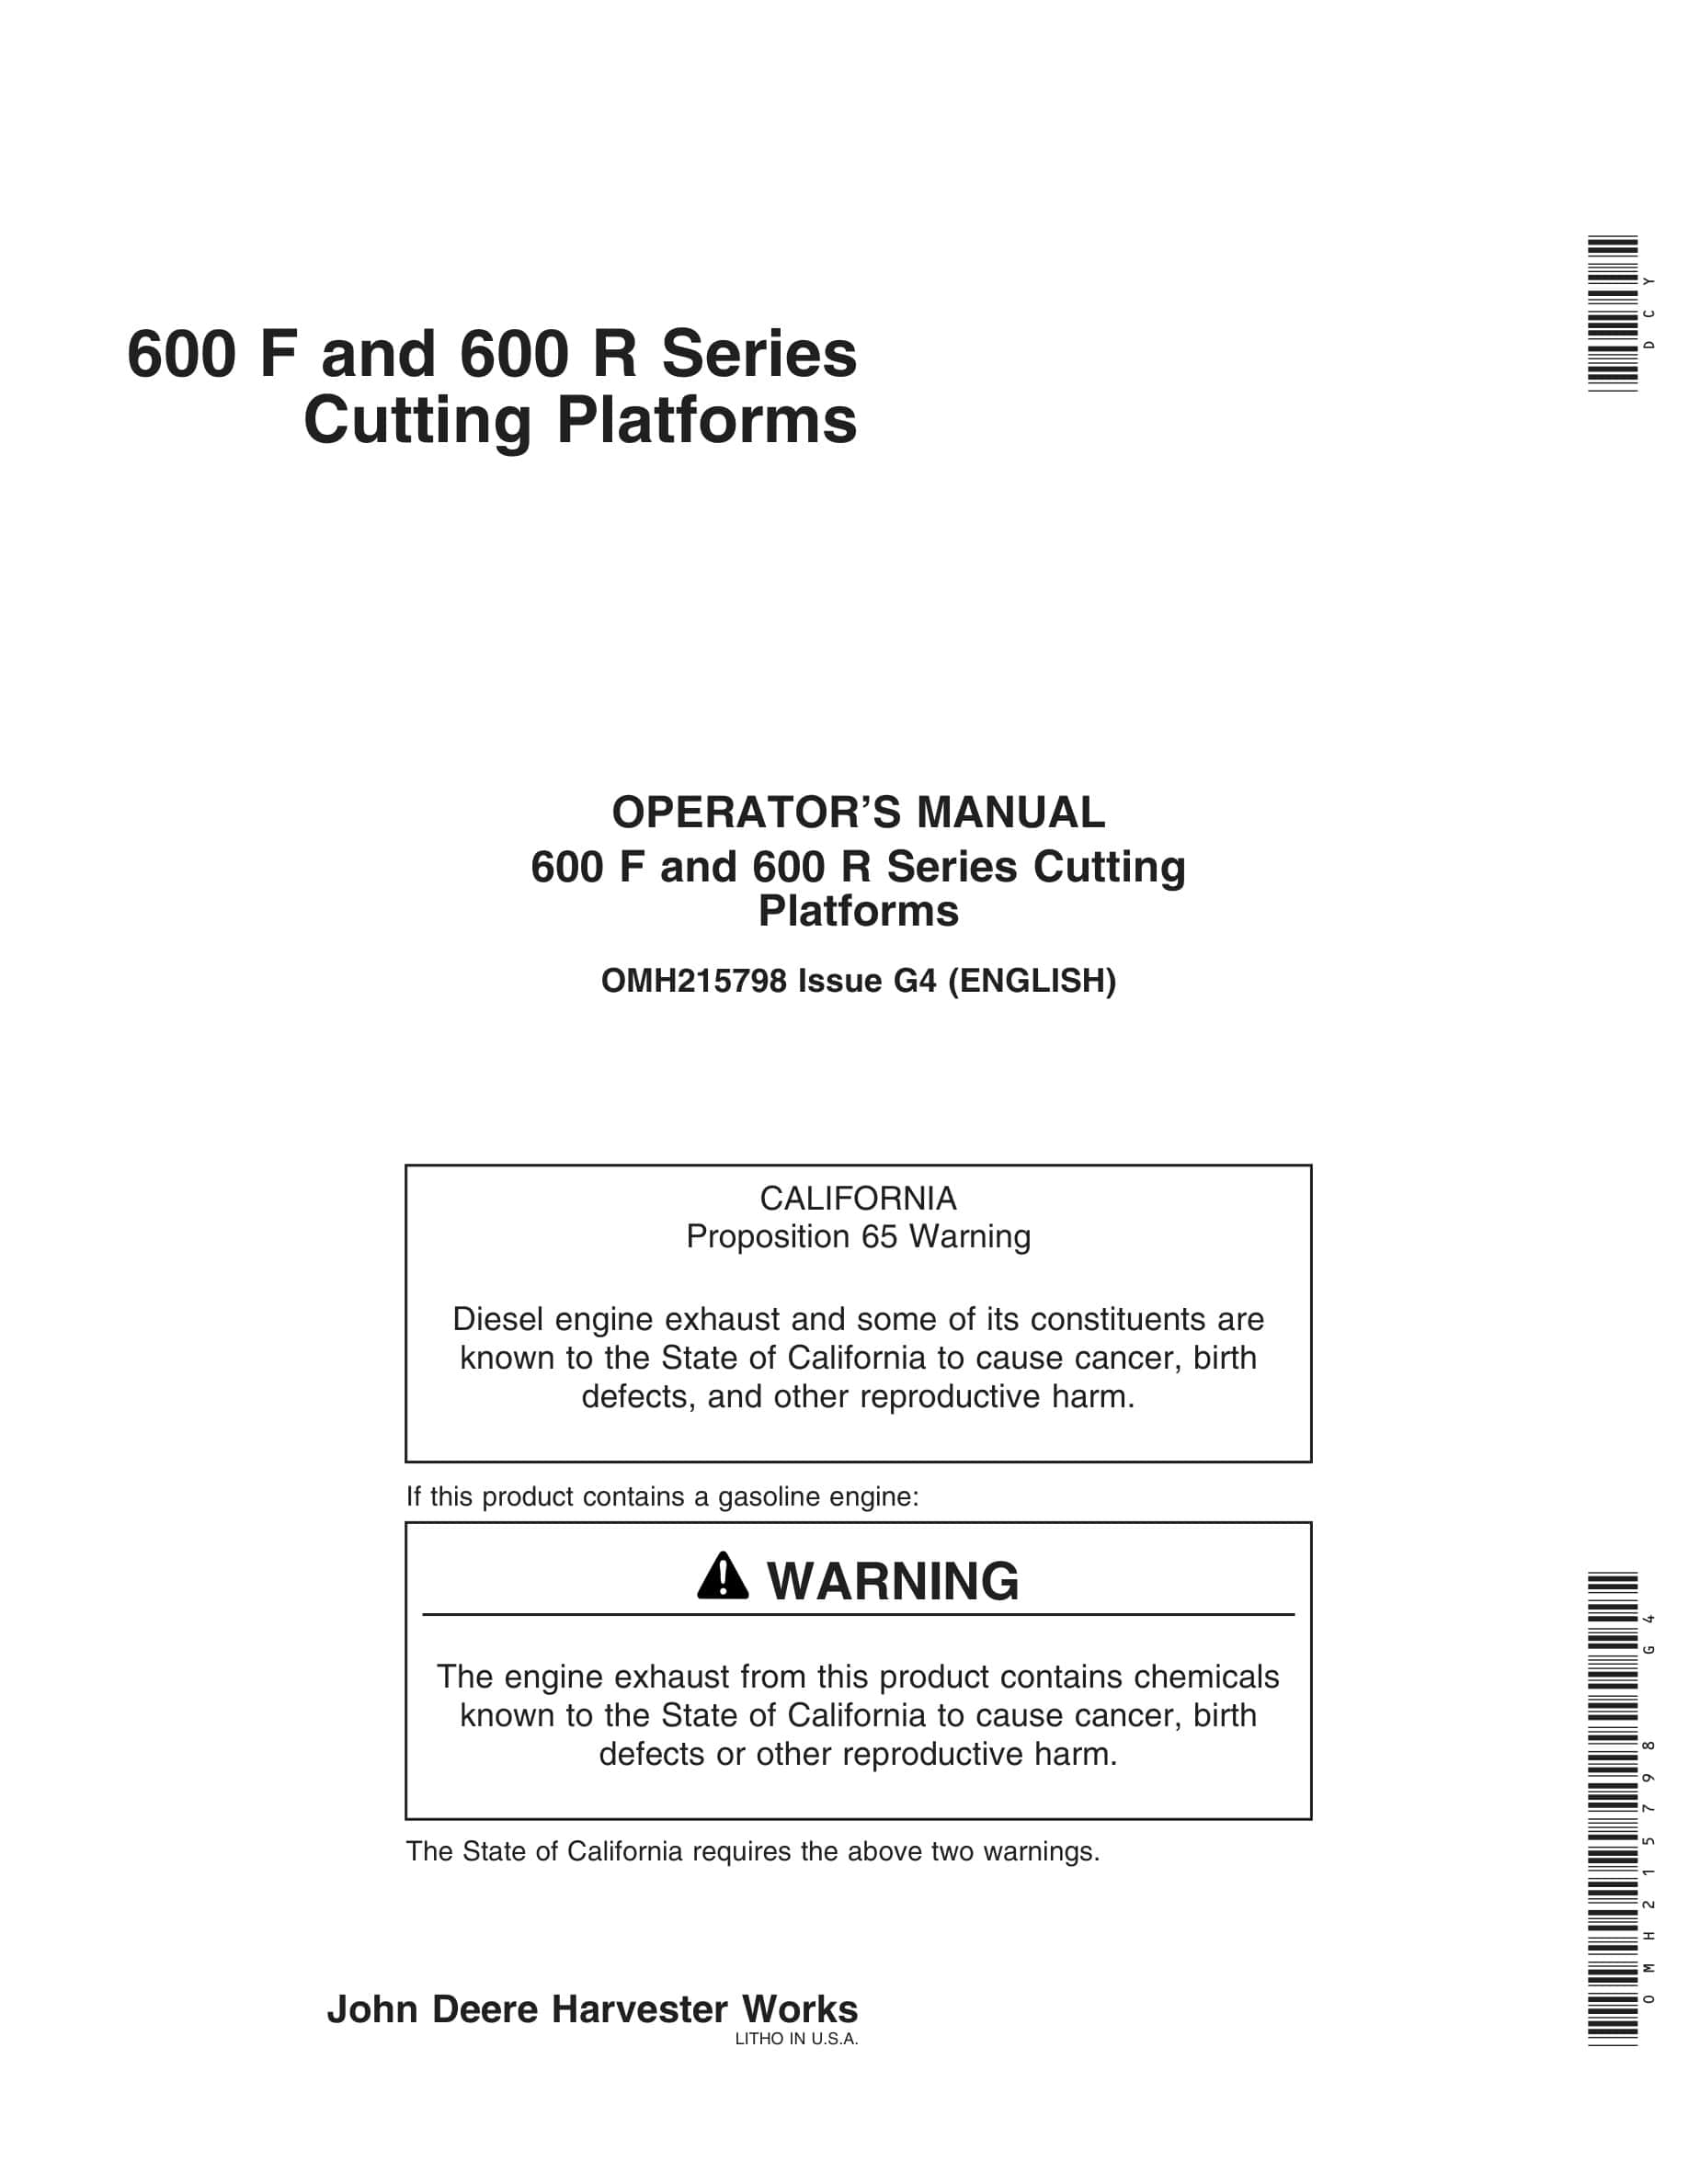 John Deere 600 F and 600 R Series Cutting Platforms Operator Manual OMH215798-1